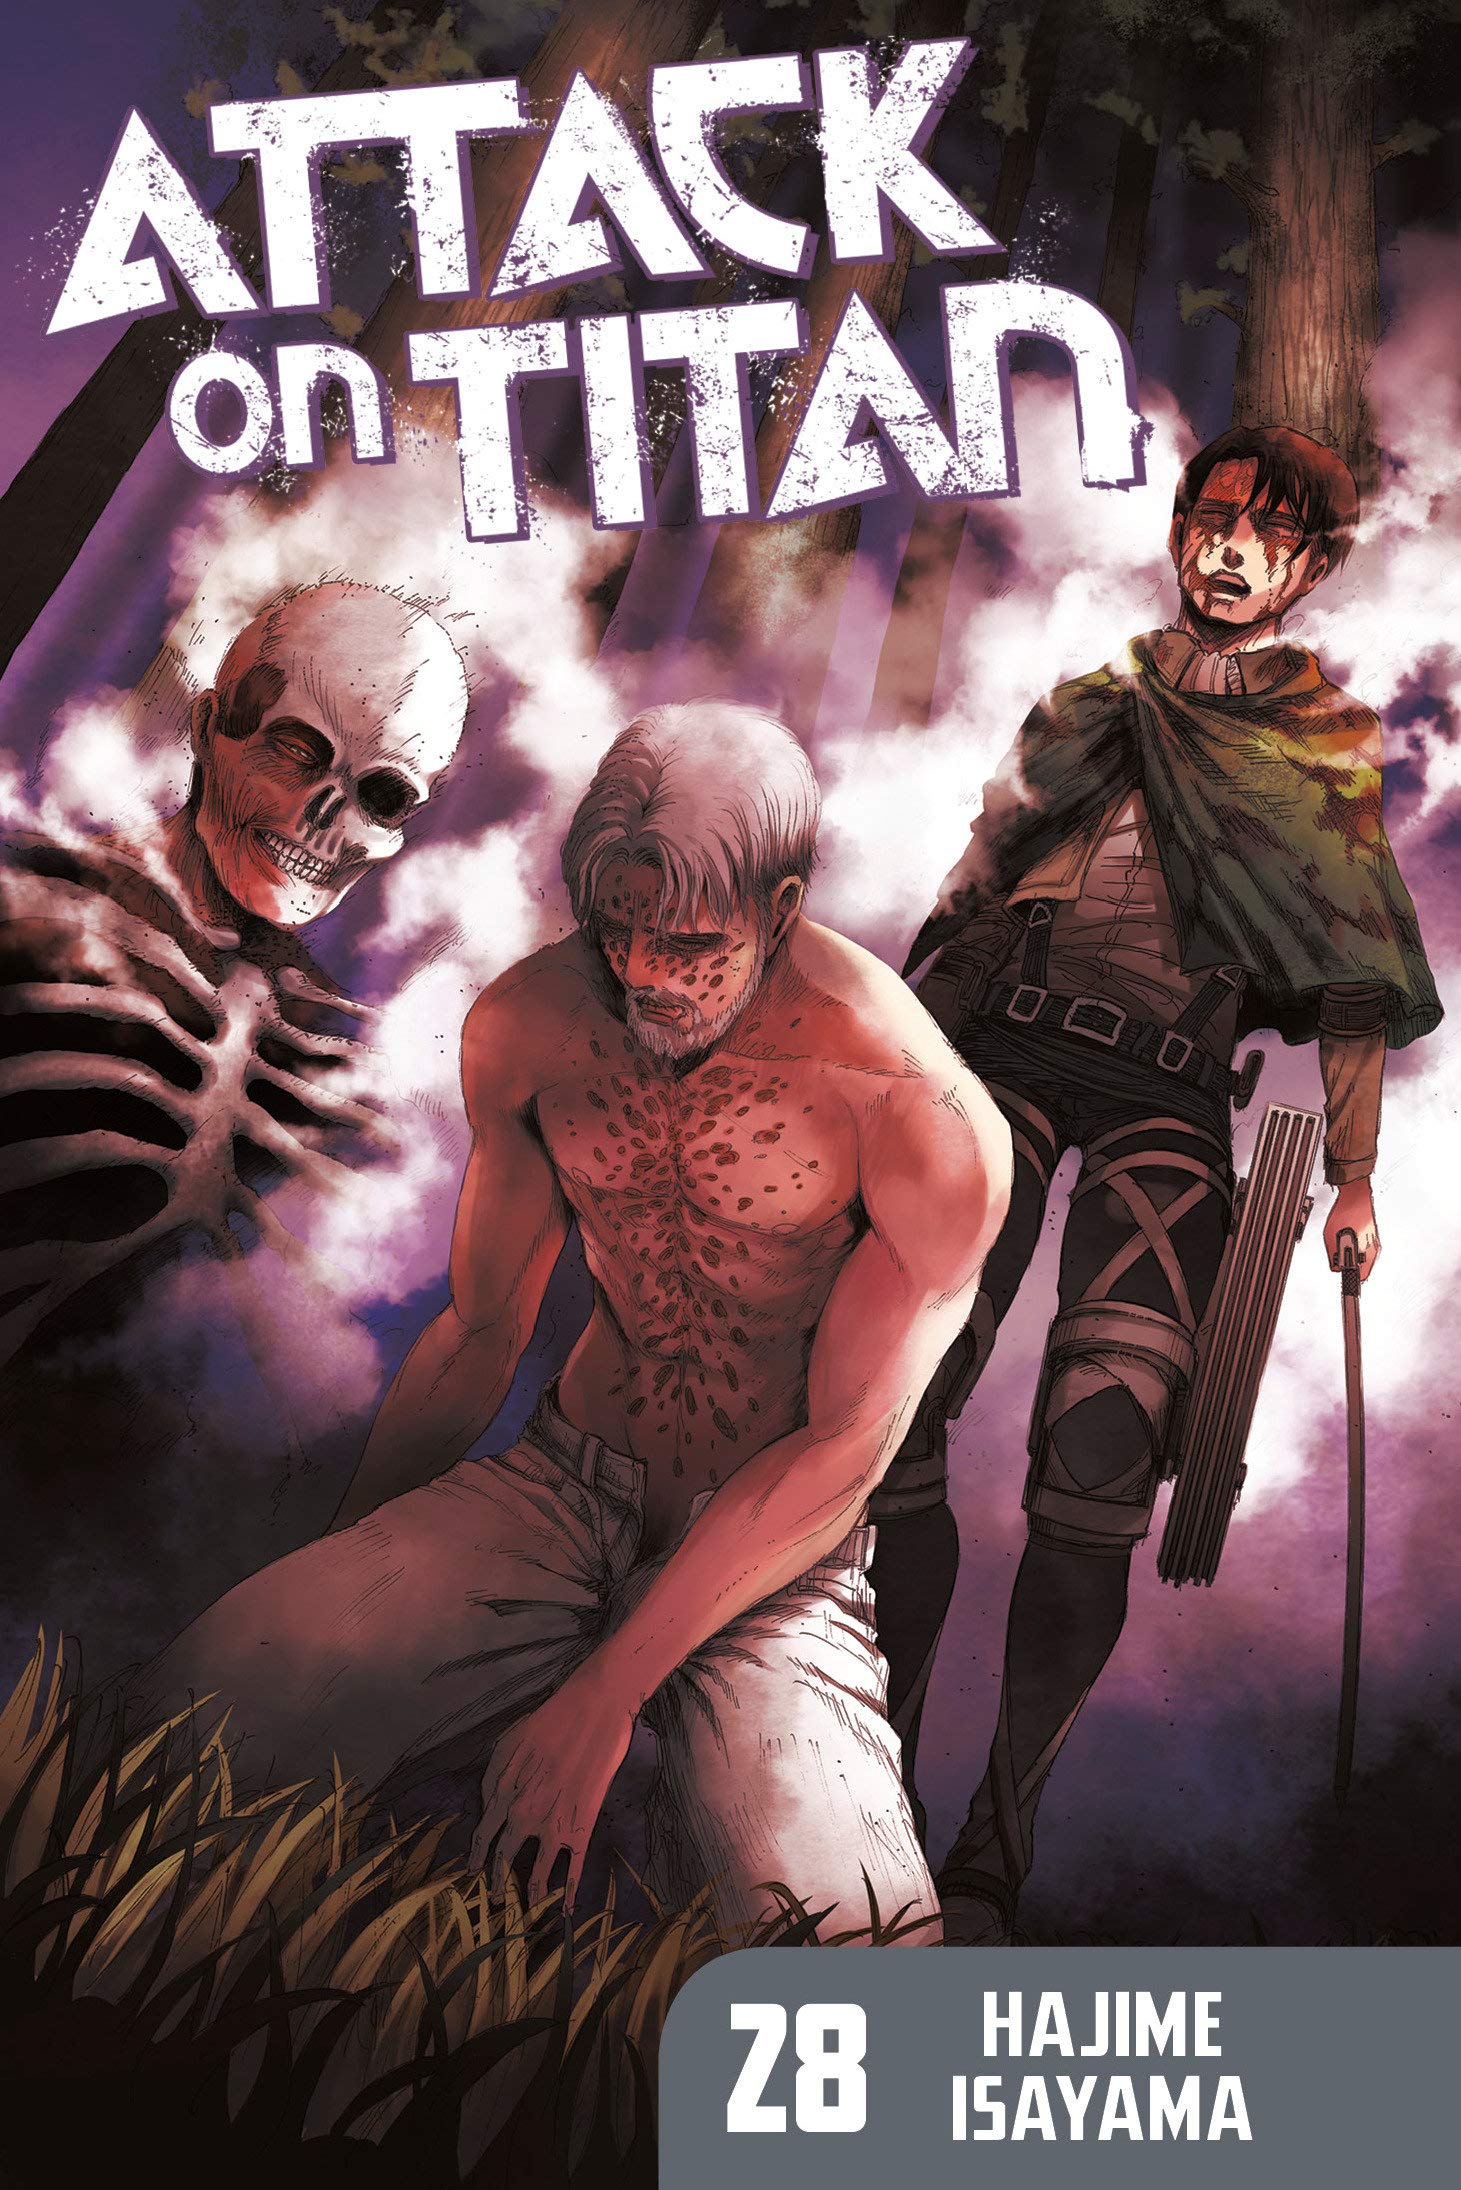 Attack on Titan Manga Volume 28 (Mature)